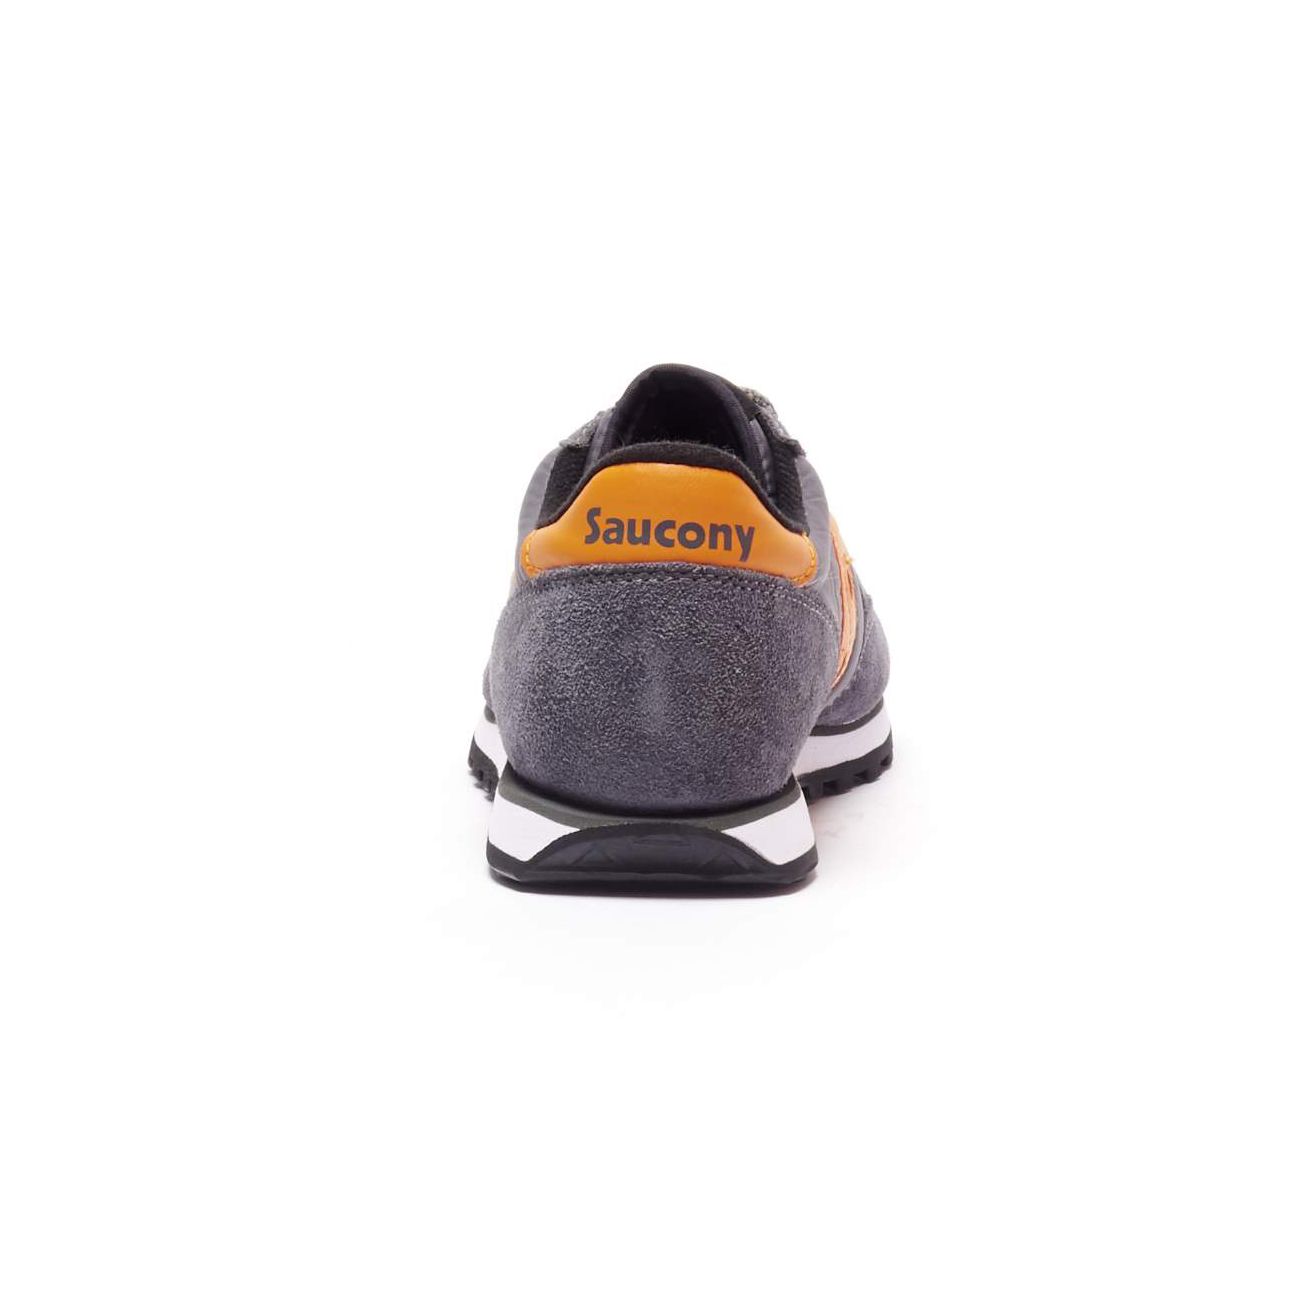 saucony sneakers orange